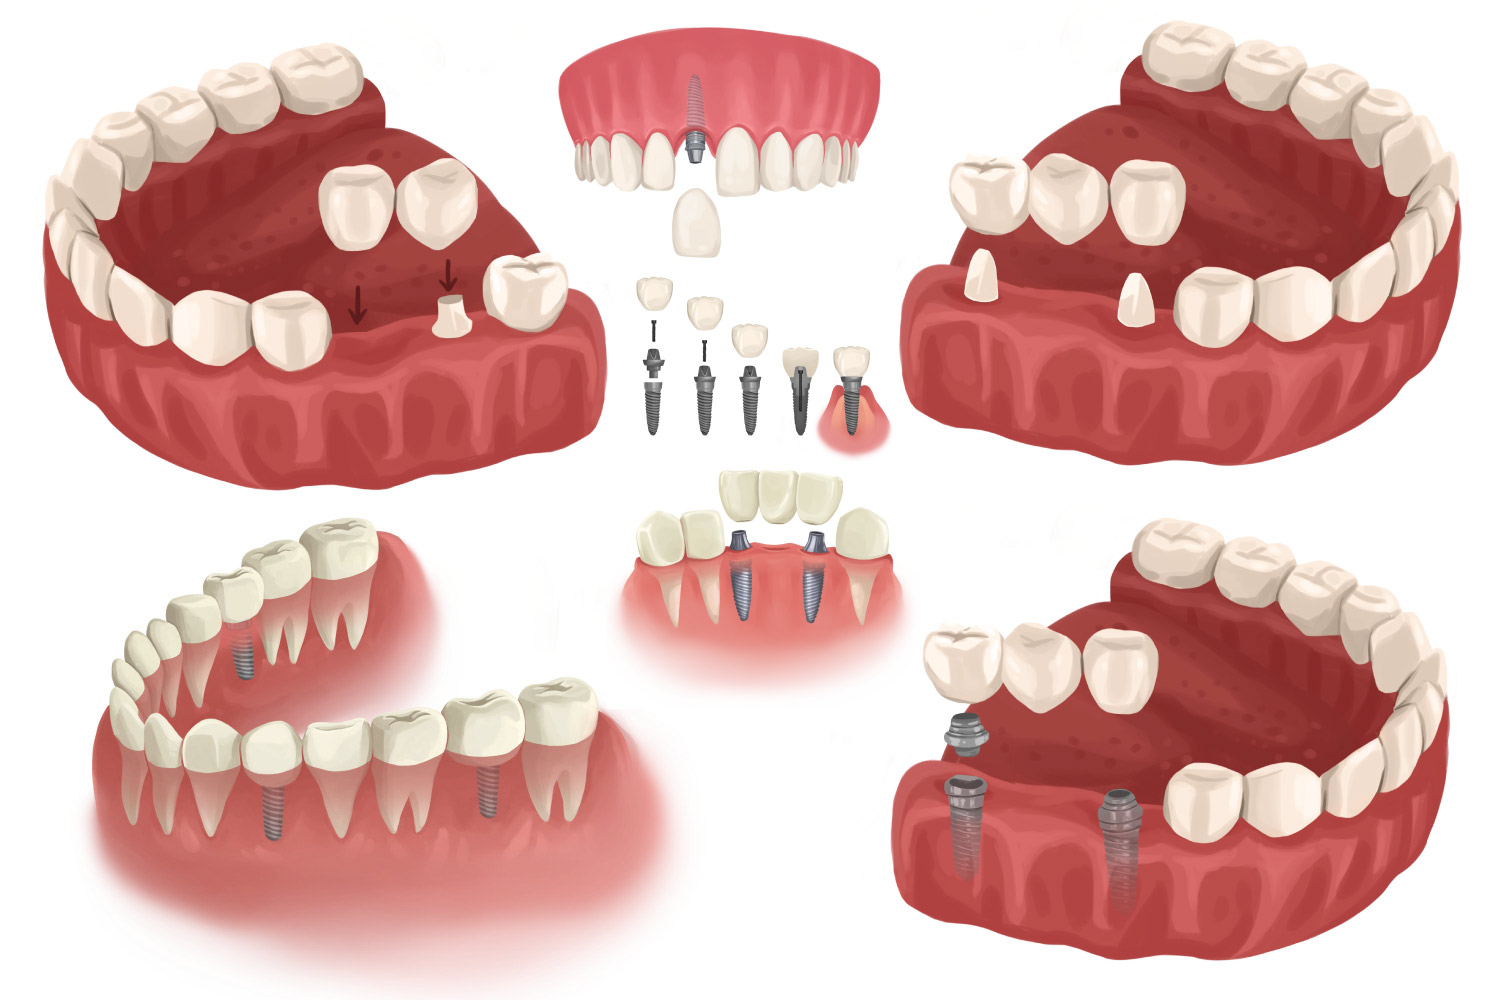 Illustration of different configurations of dental implants and dental bridges